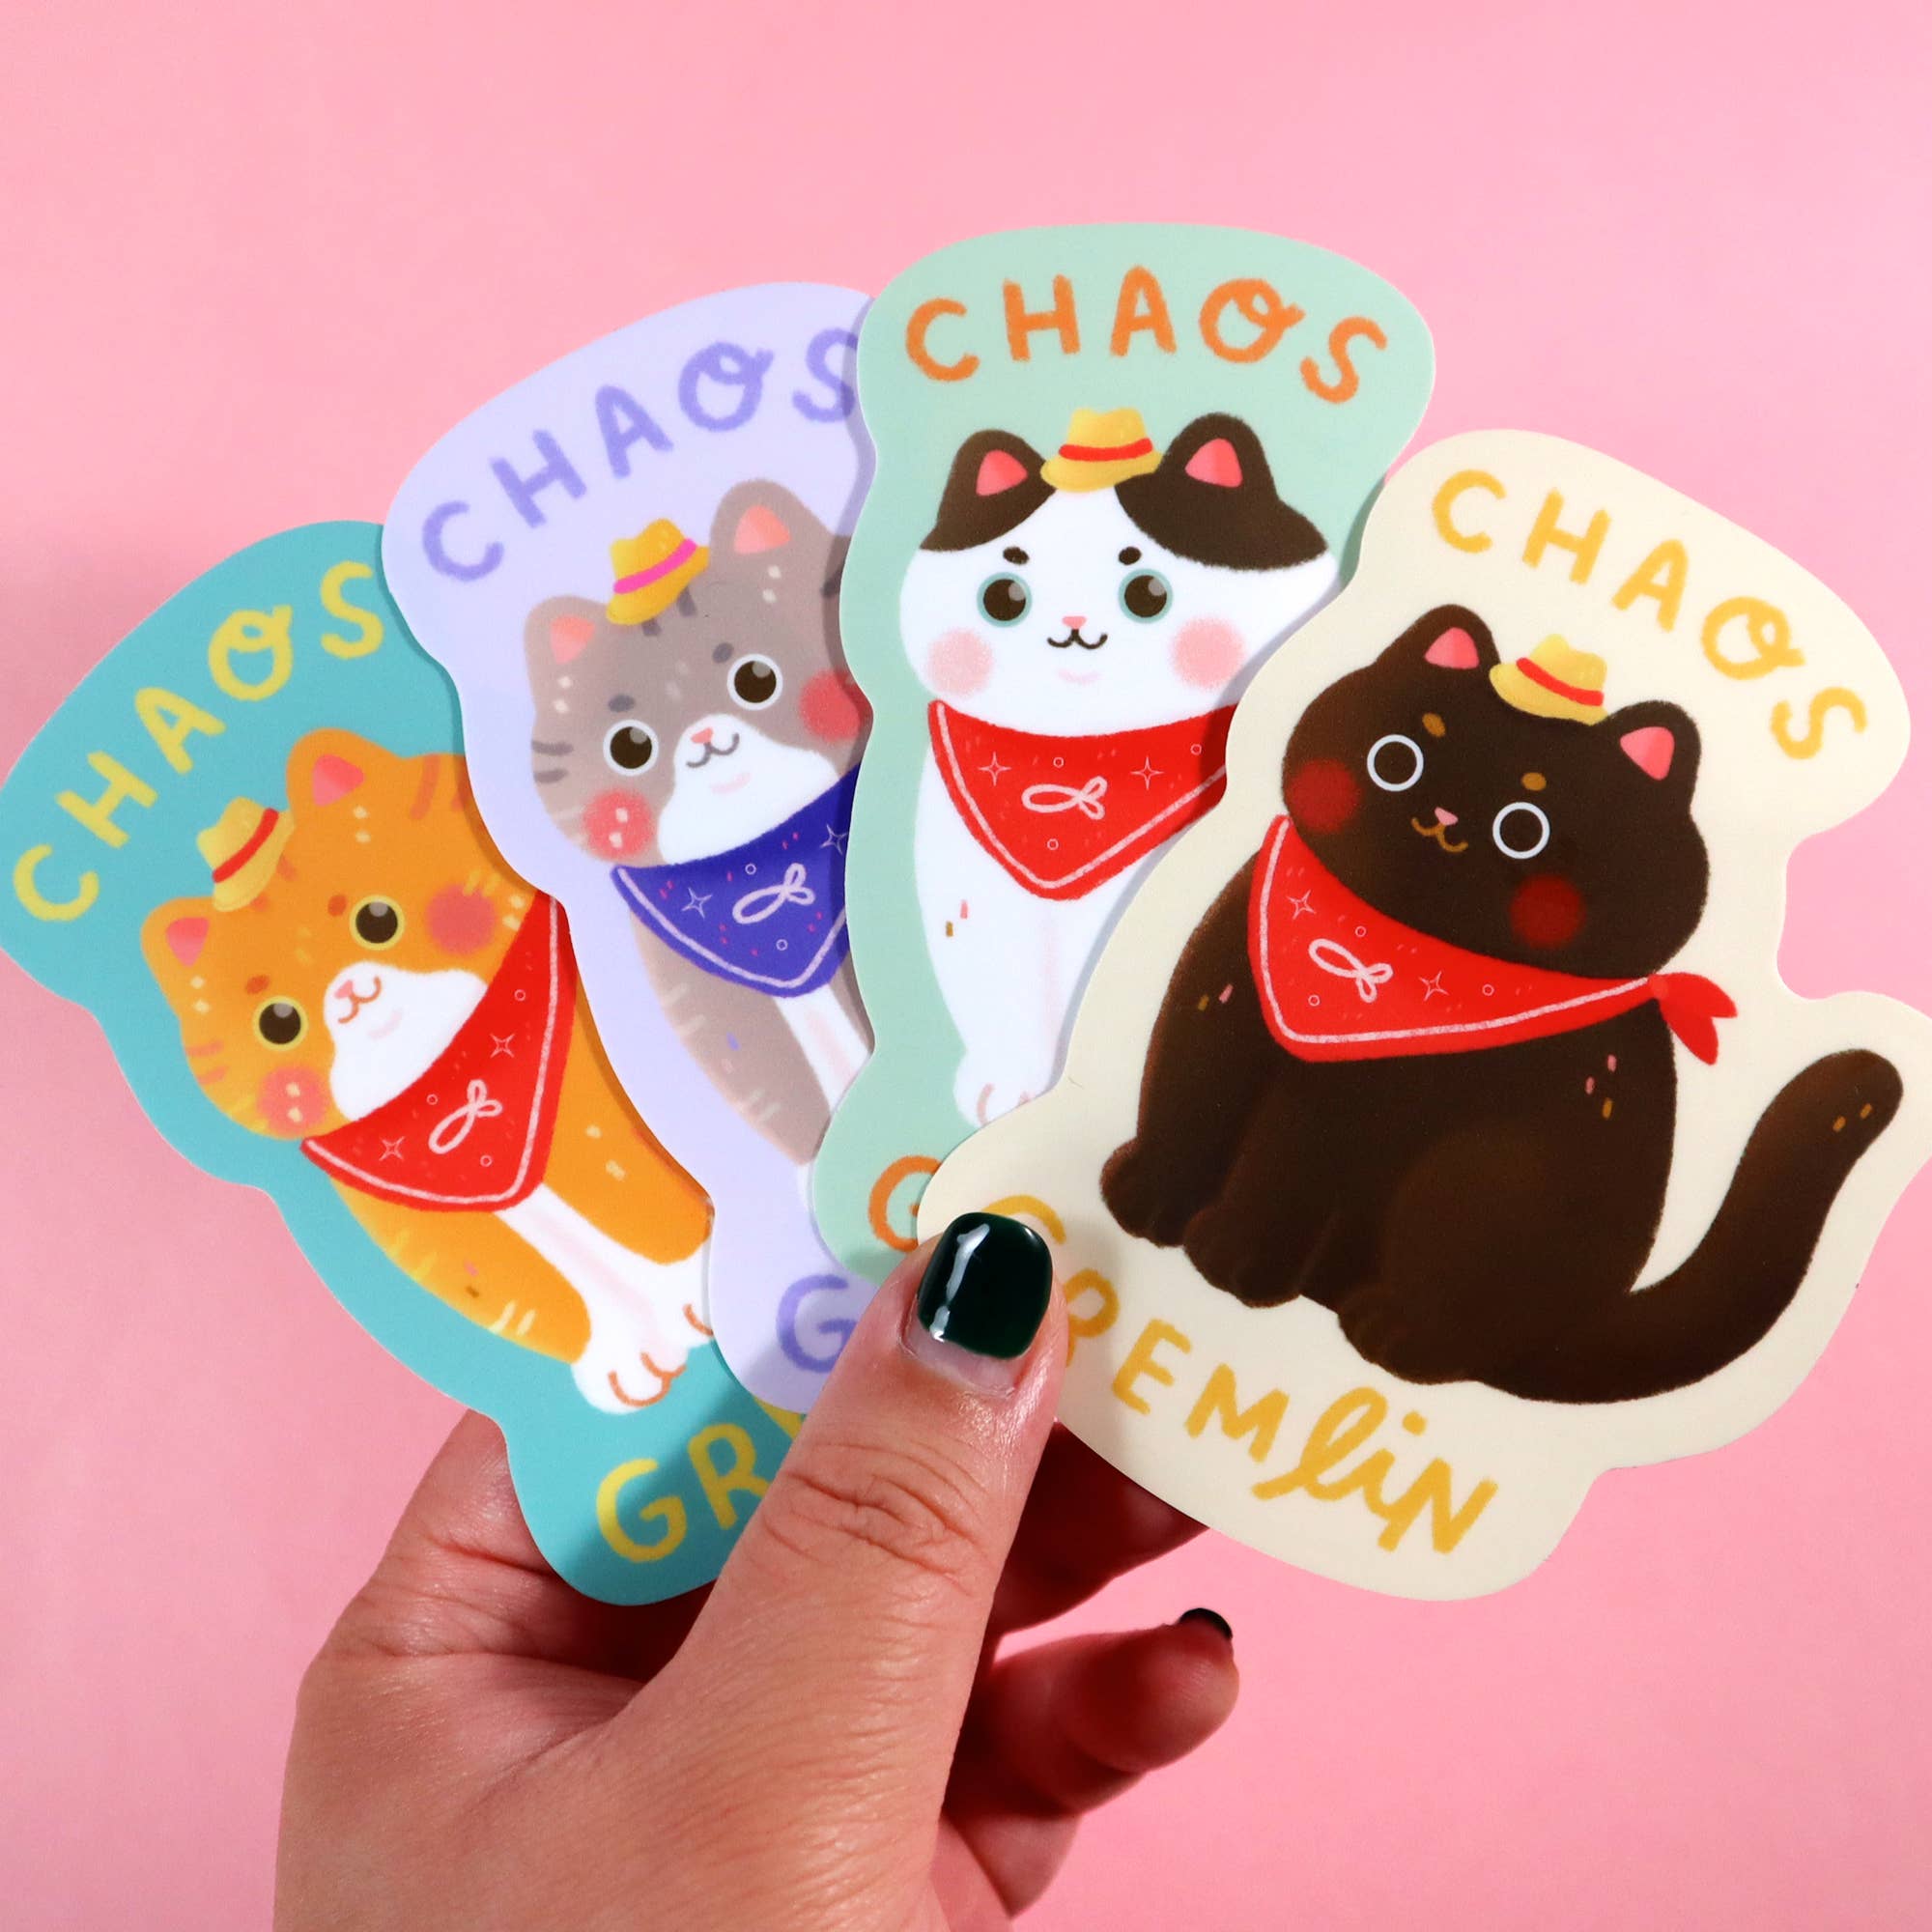 Chaos Gremlin Cat Stickers: Orange Cat